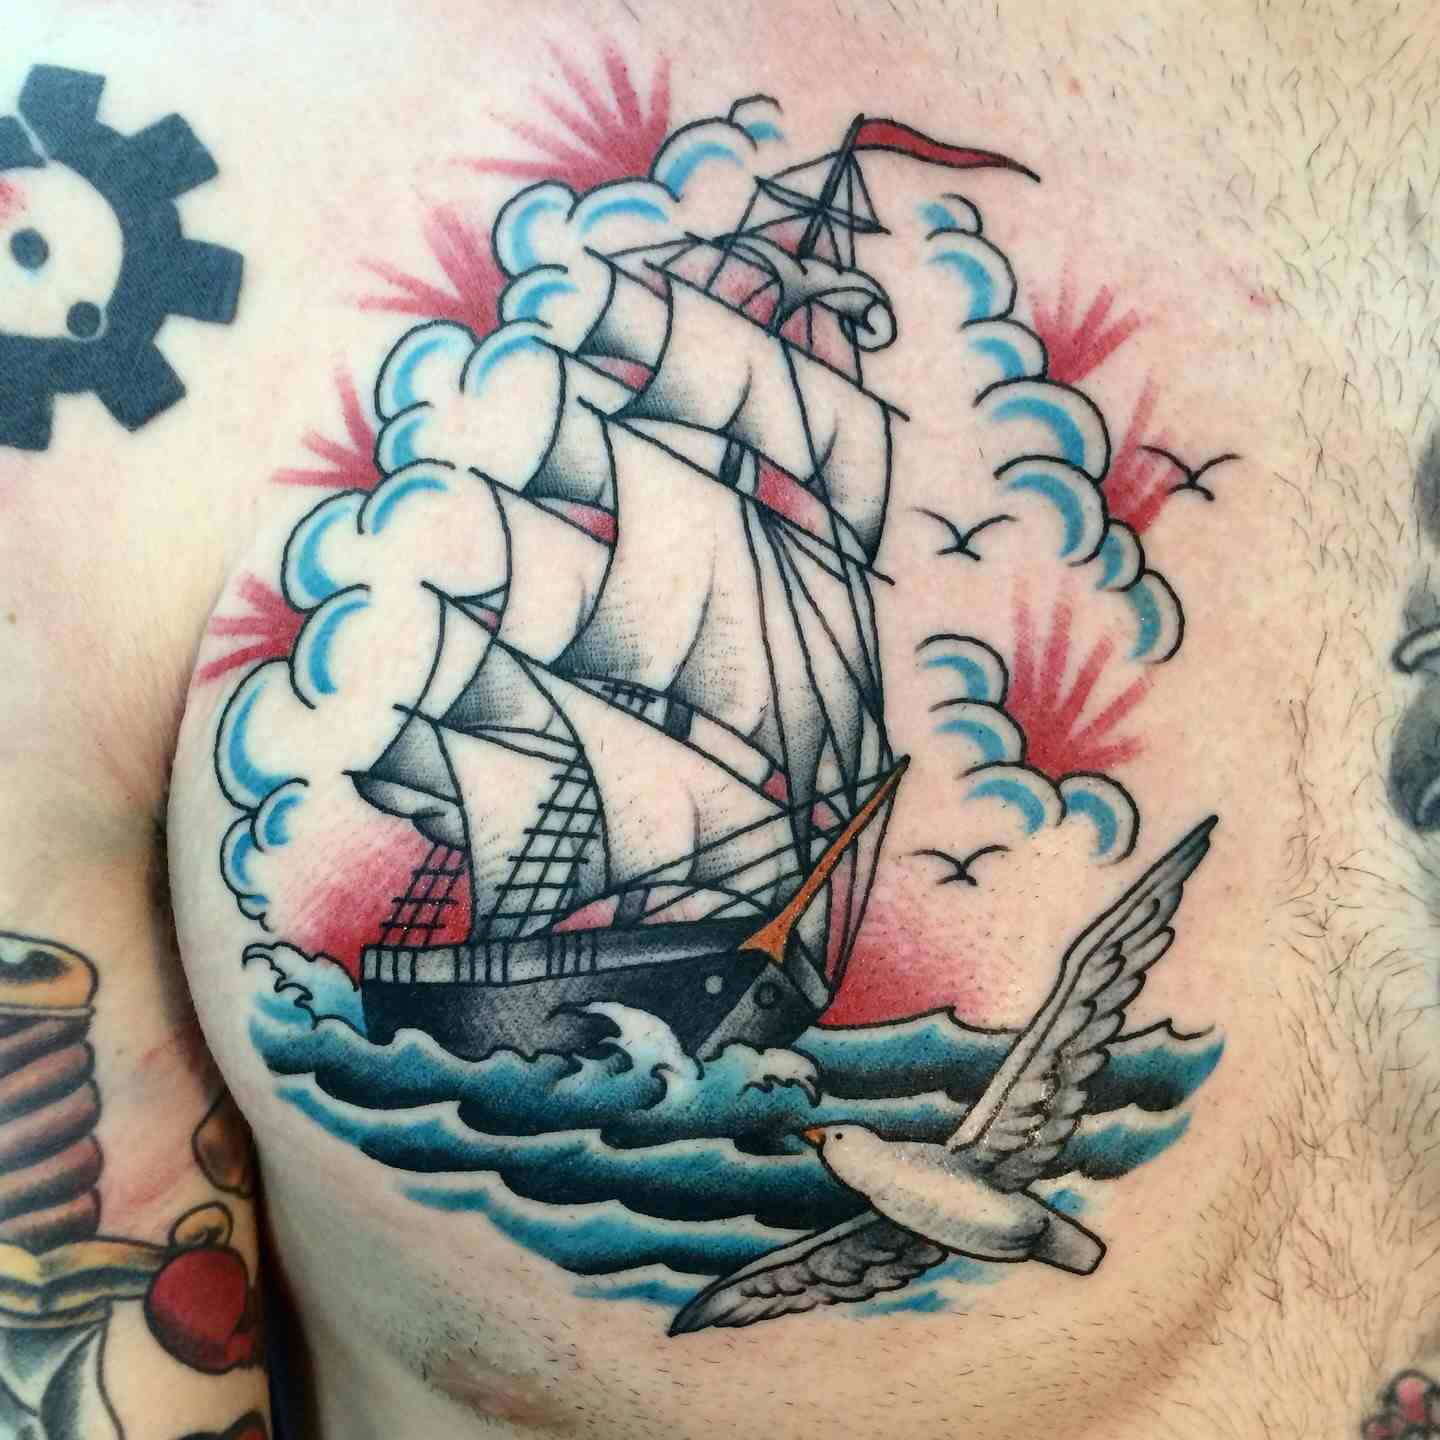 Seagull clipper ship tattoo